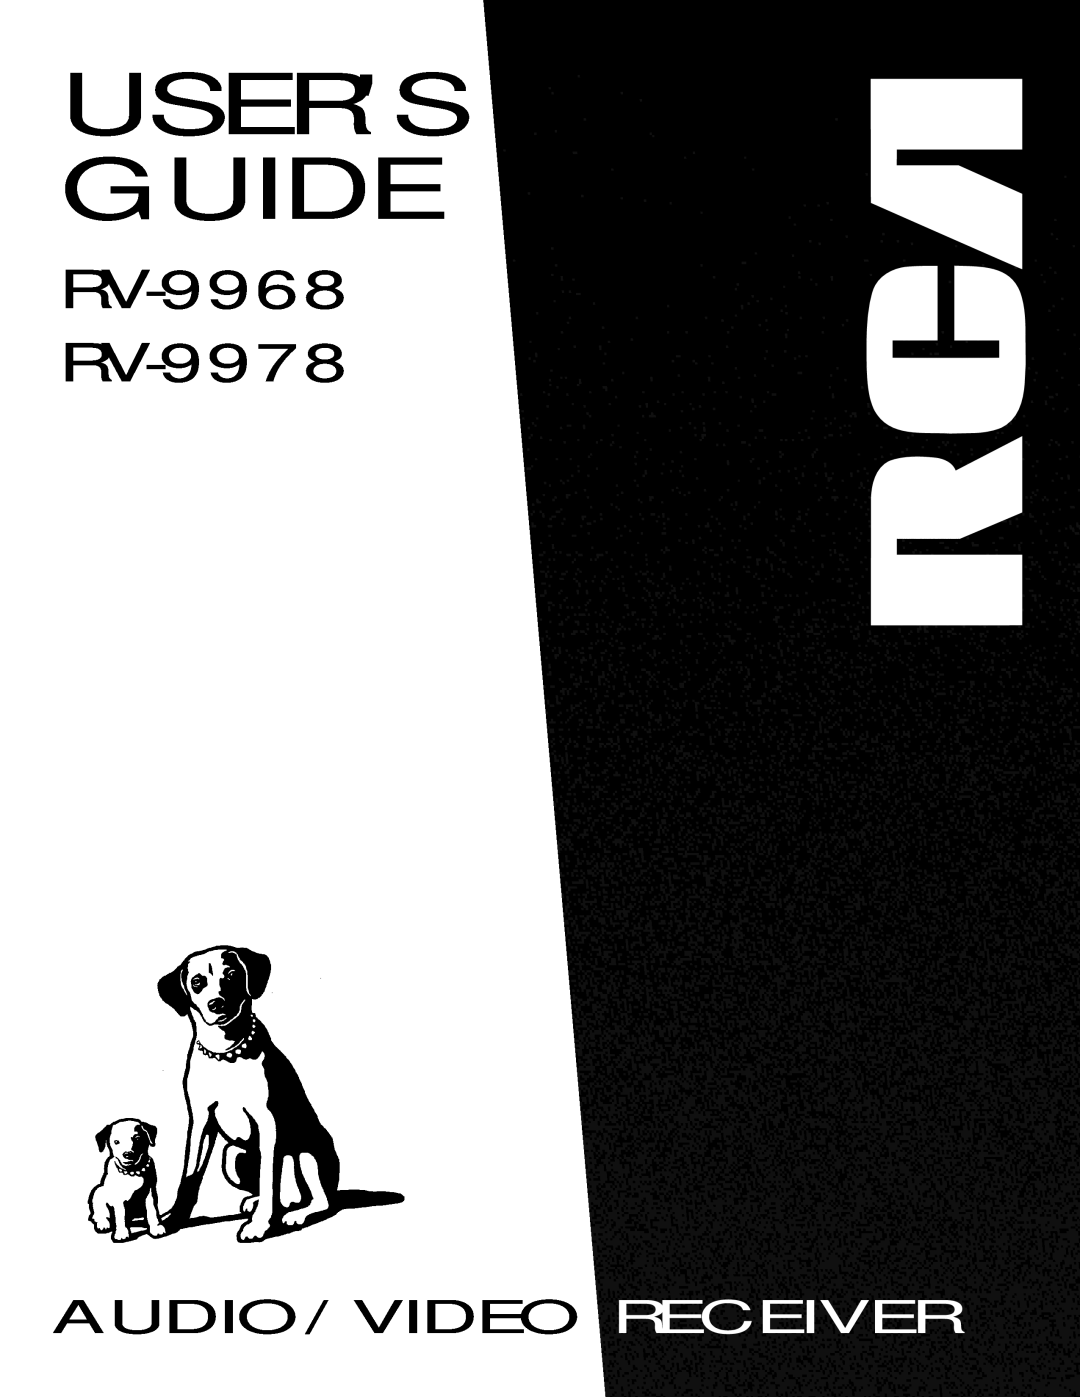 RCA manual Users Guide, RV-9968 RV-9978, Audio/Video Receiver 